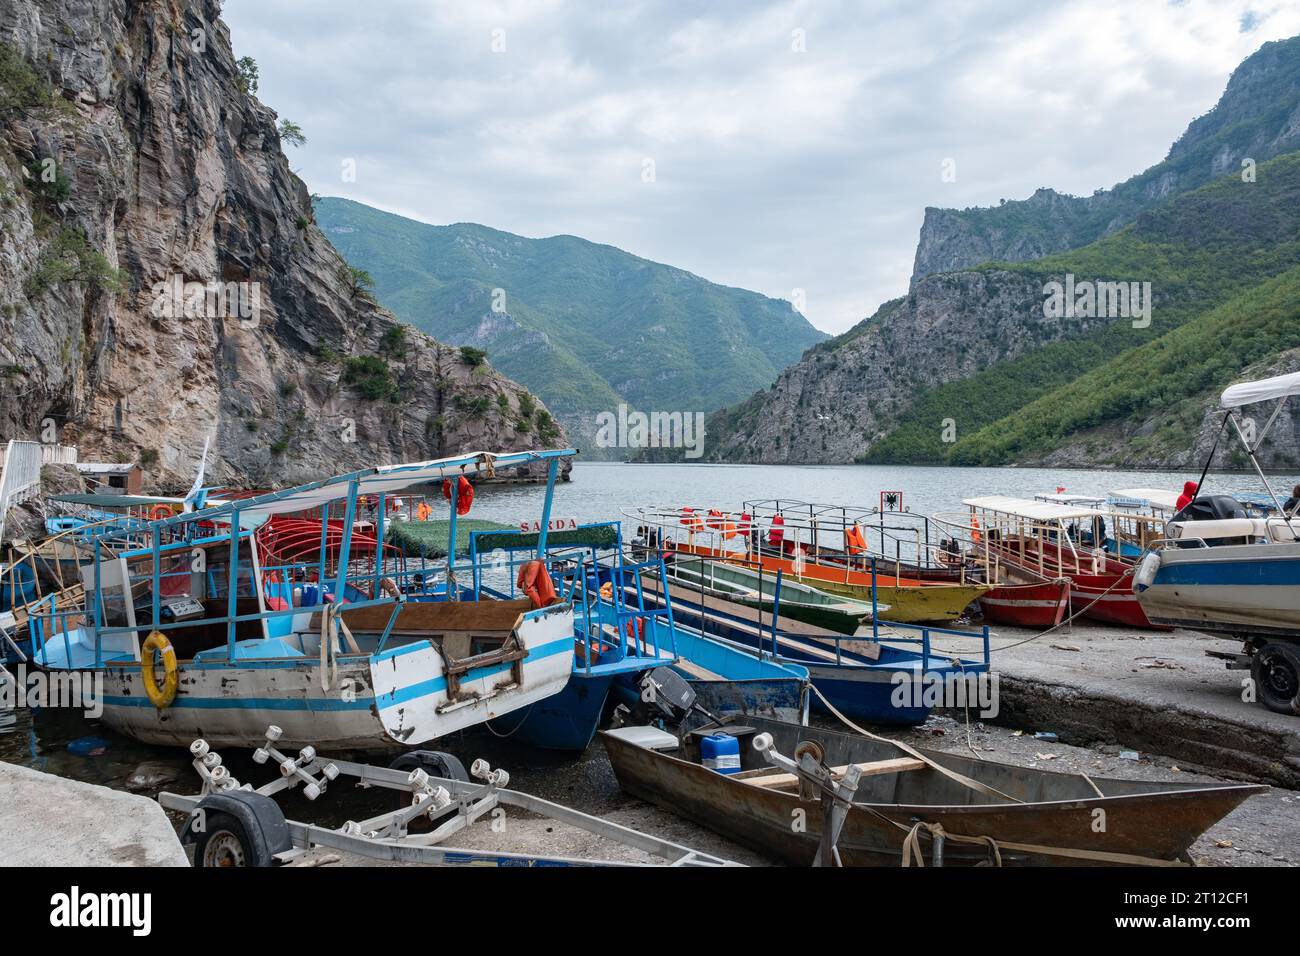 The port and day tripper boats at Lake Komani, Albania Stock Photo